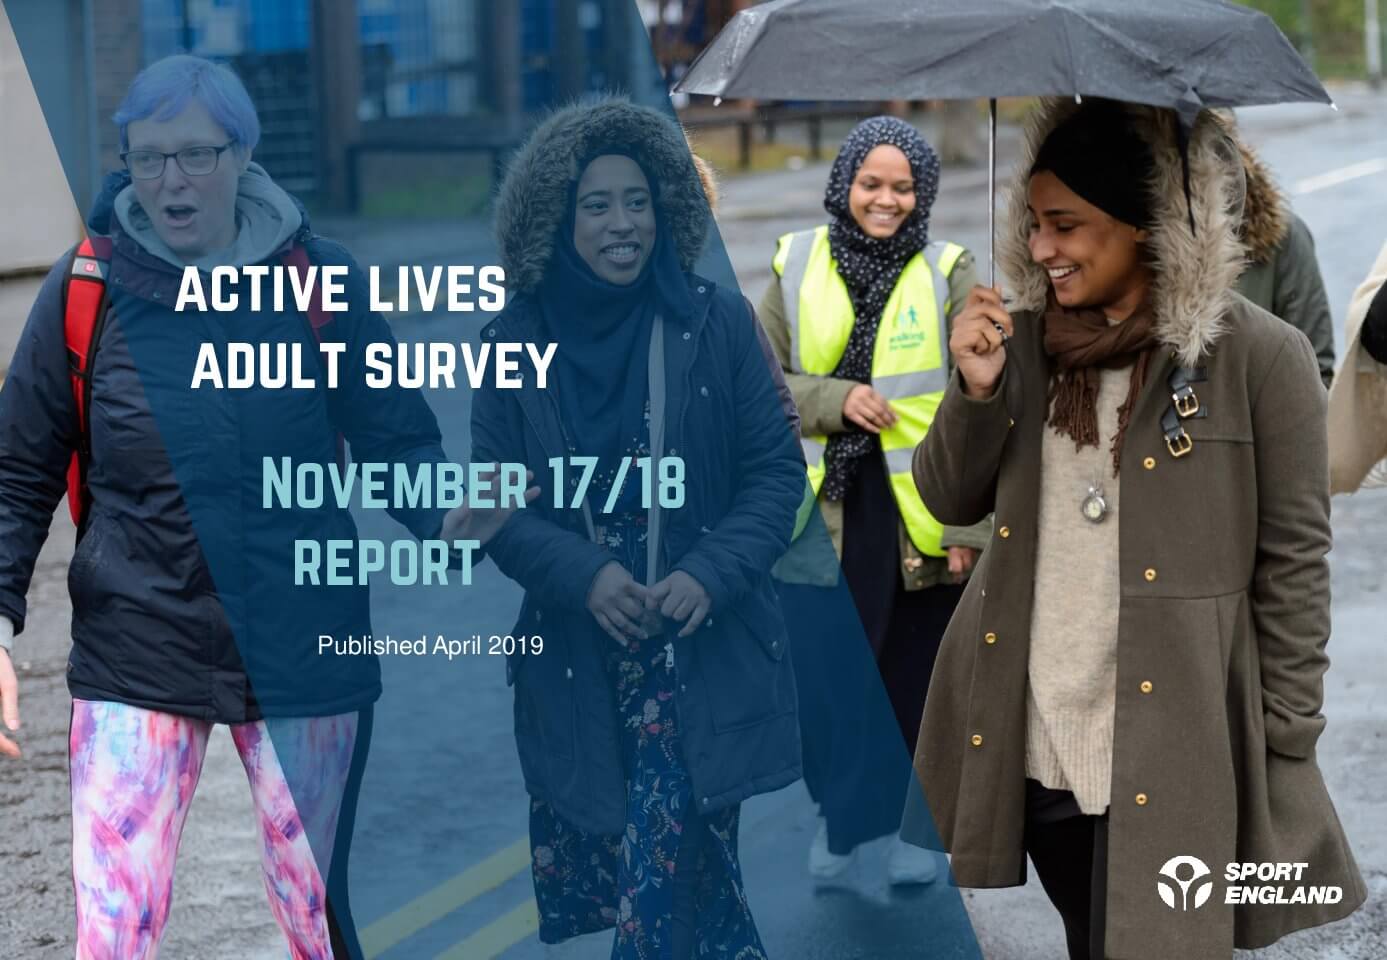 Active Lives – Adult Survey report november 2017/18